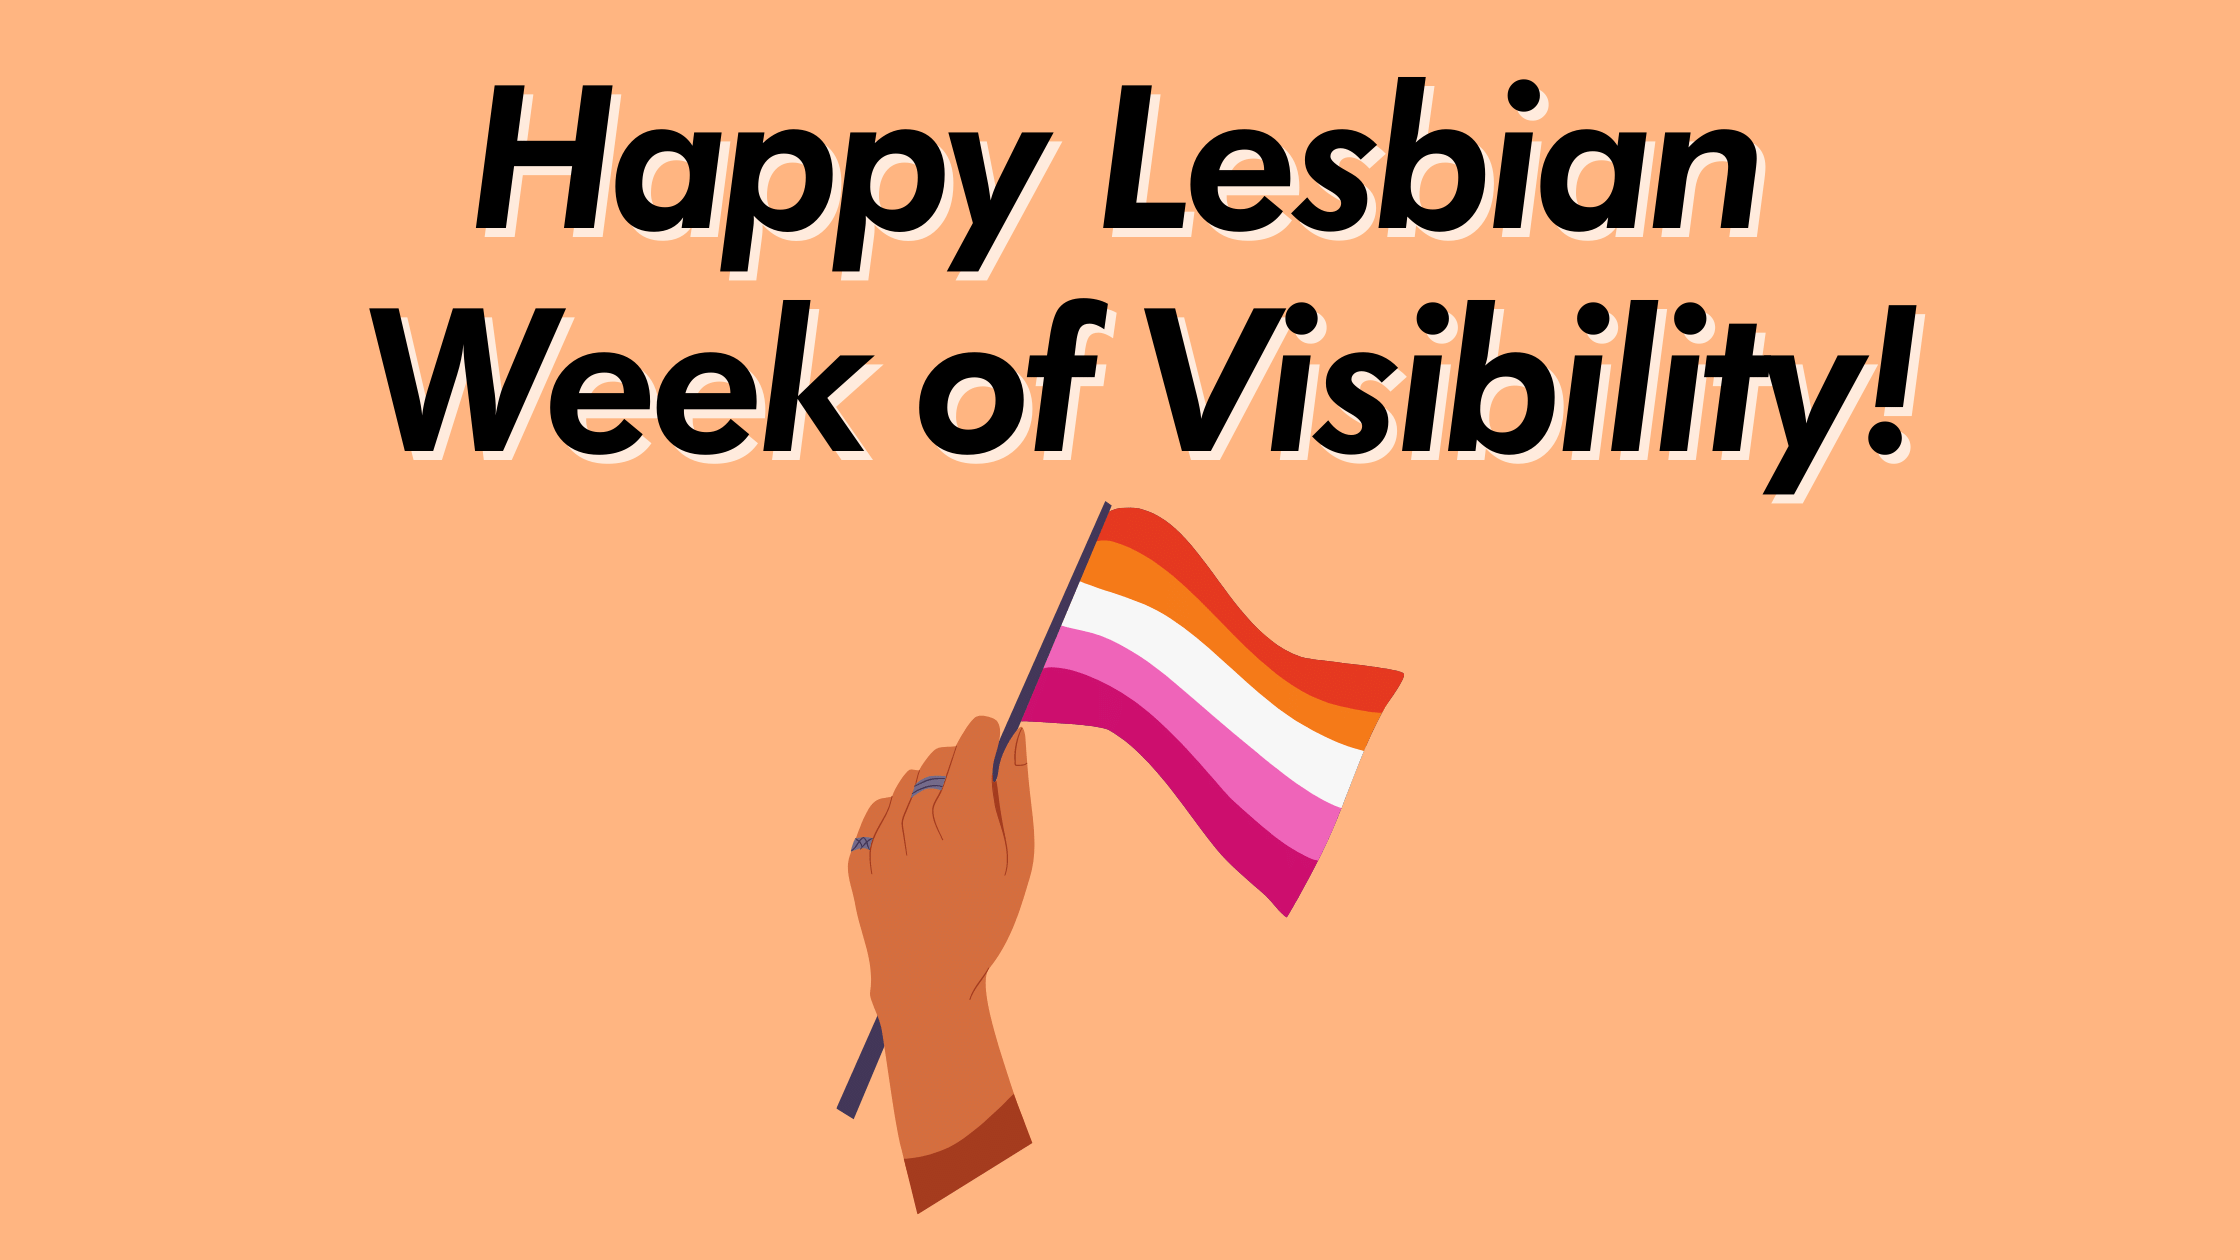 Its Lesbian Visibility Week Pride Palace